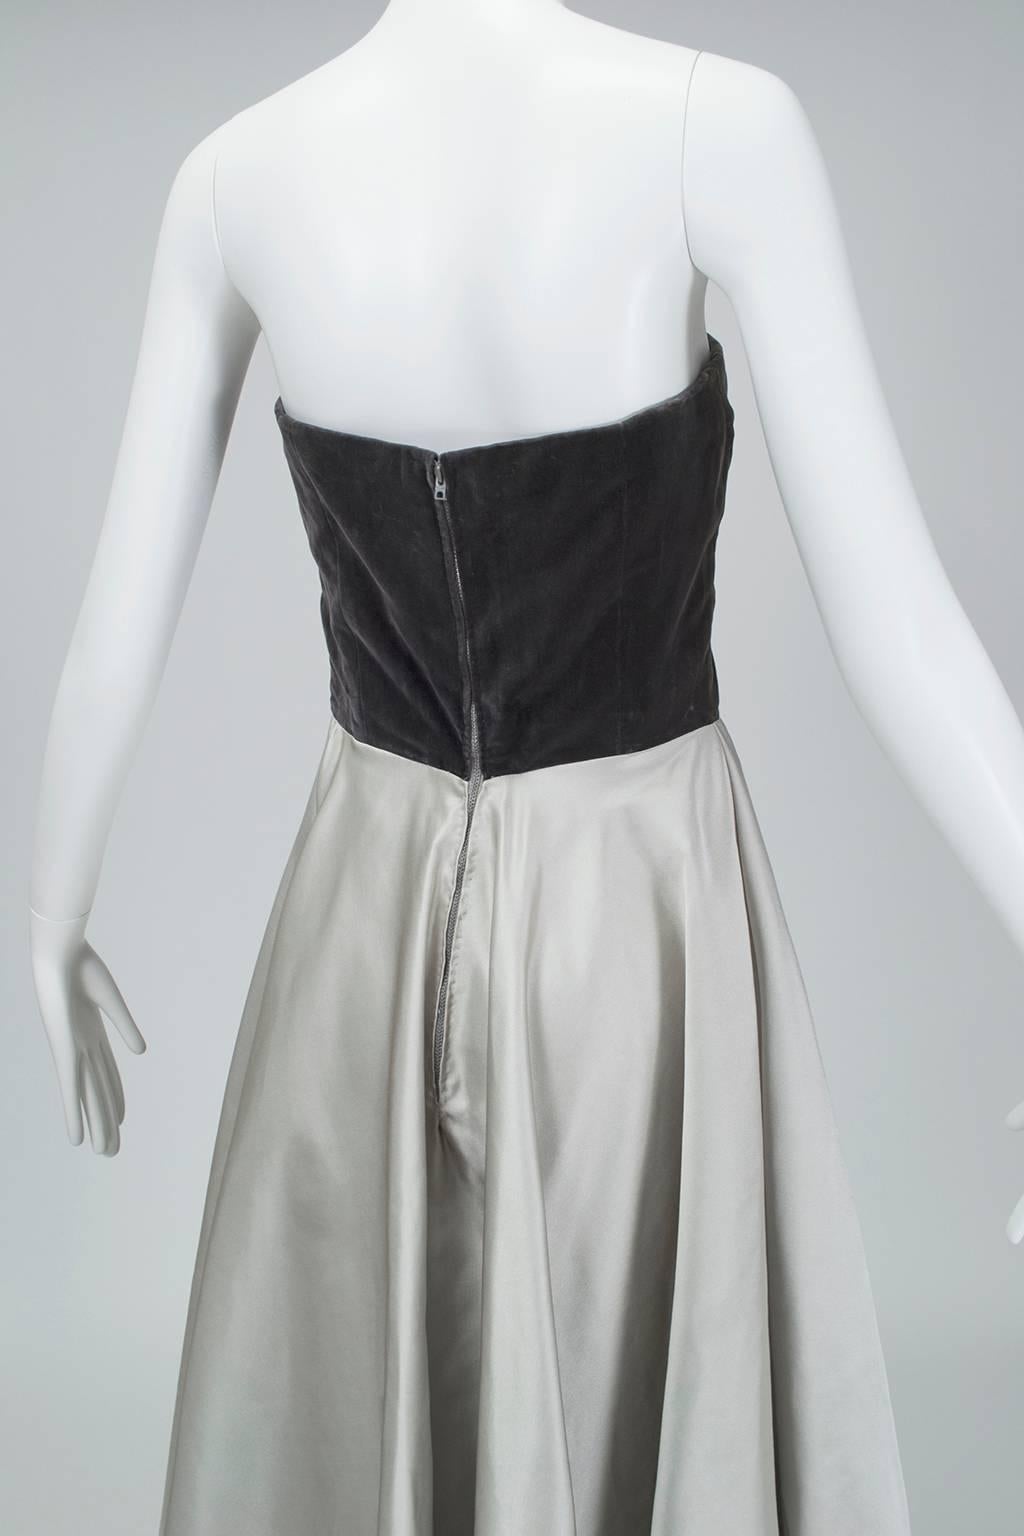 Women's Bespoke Silver and Gray Duchess Satin Strapless Ball Gown, Paris - Medium, 1950s